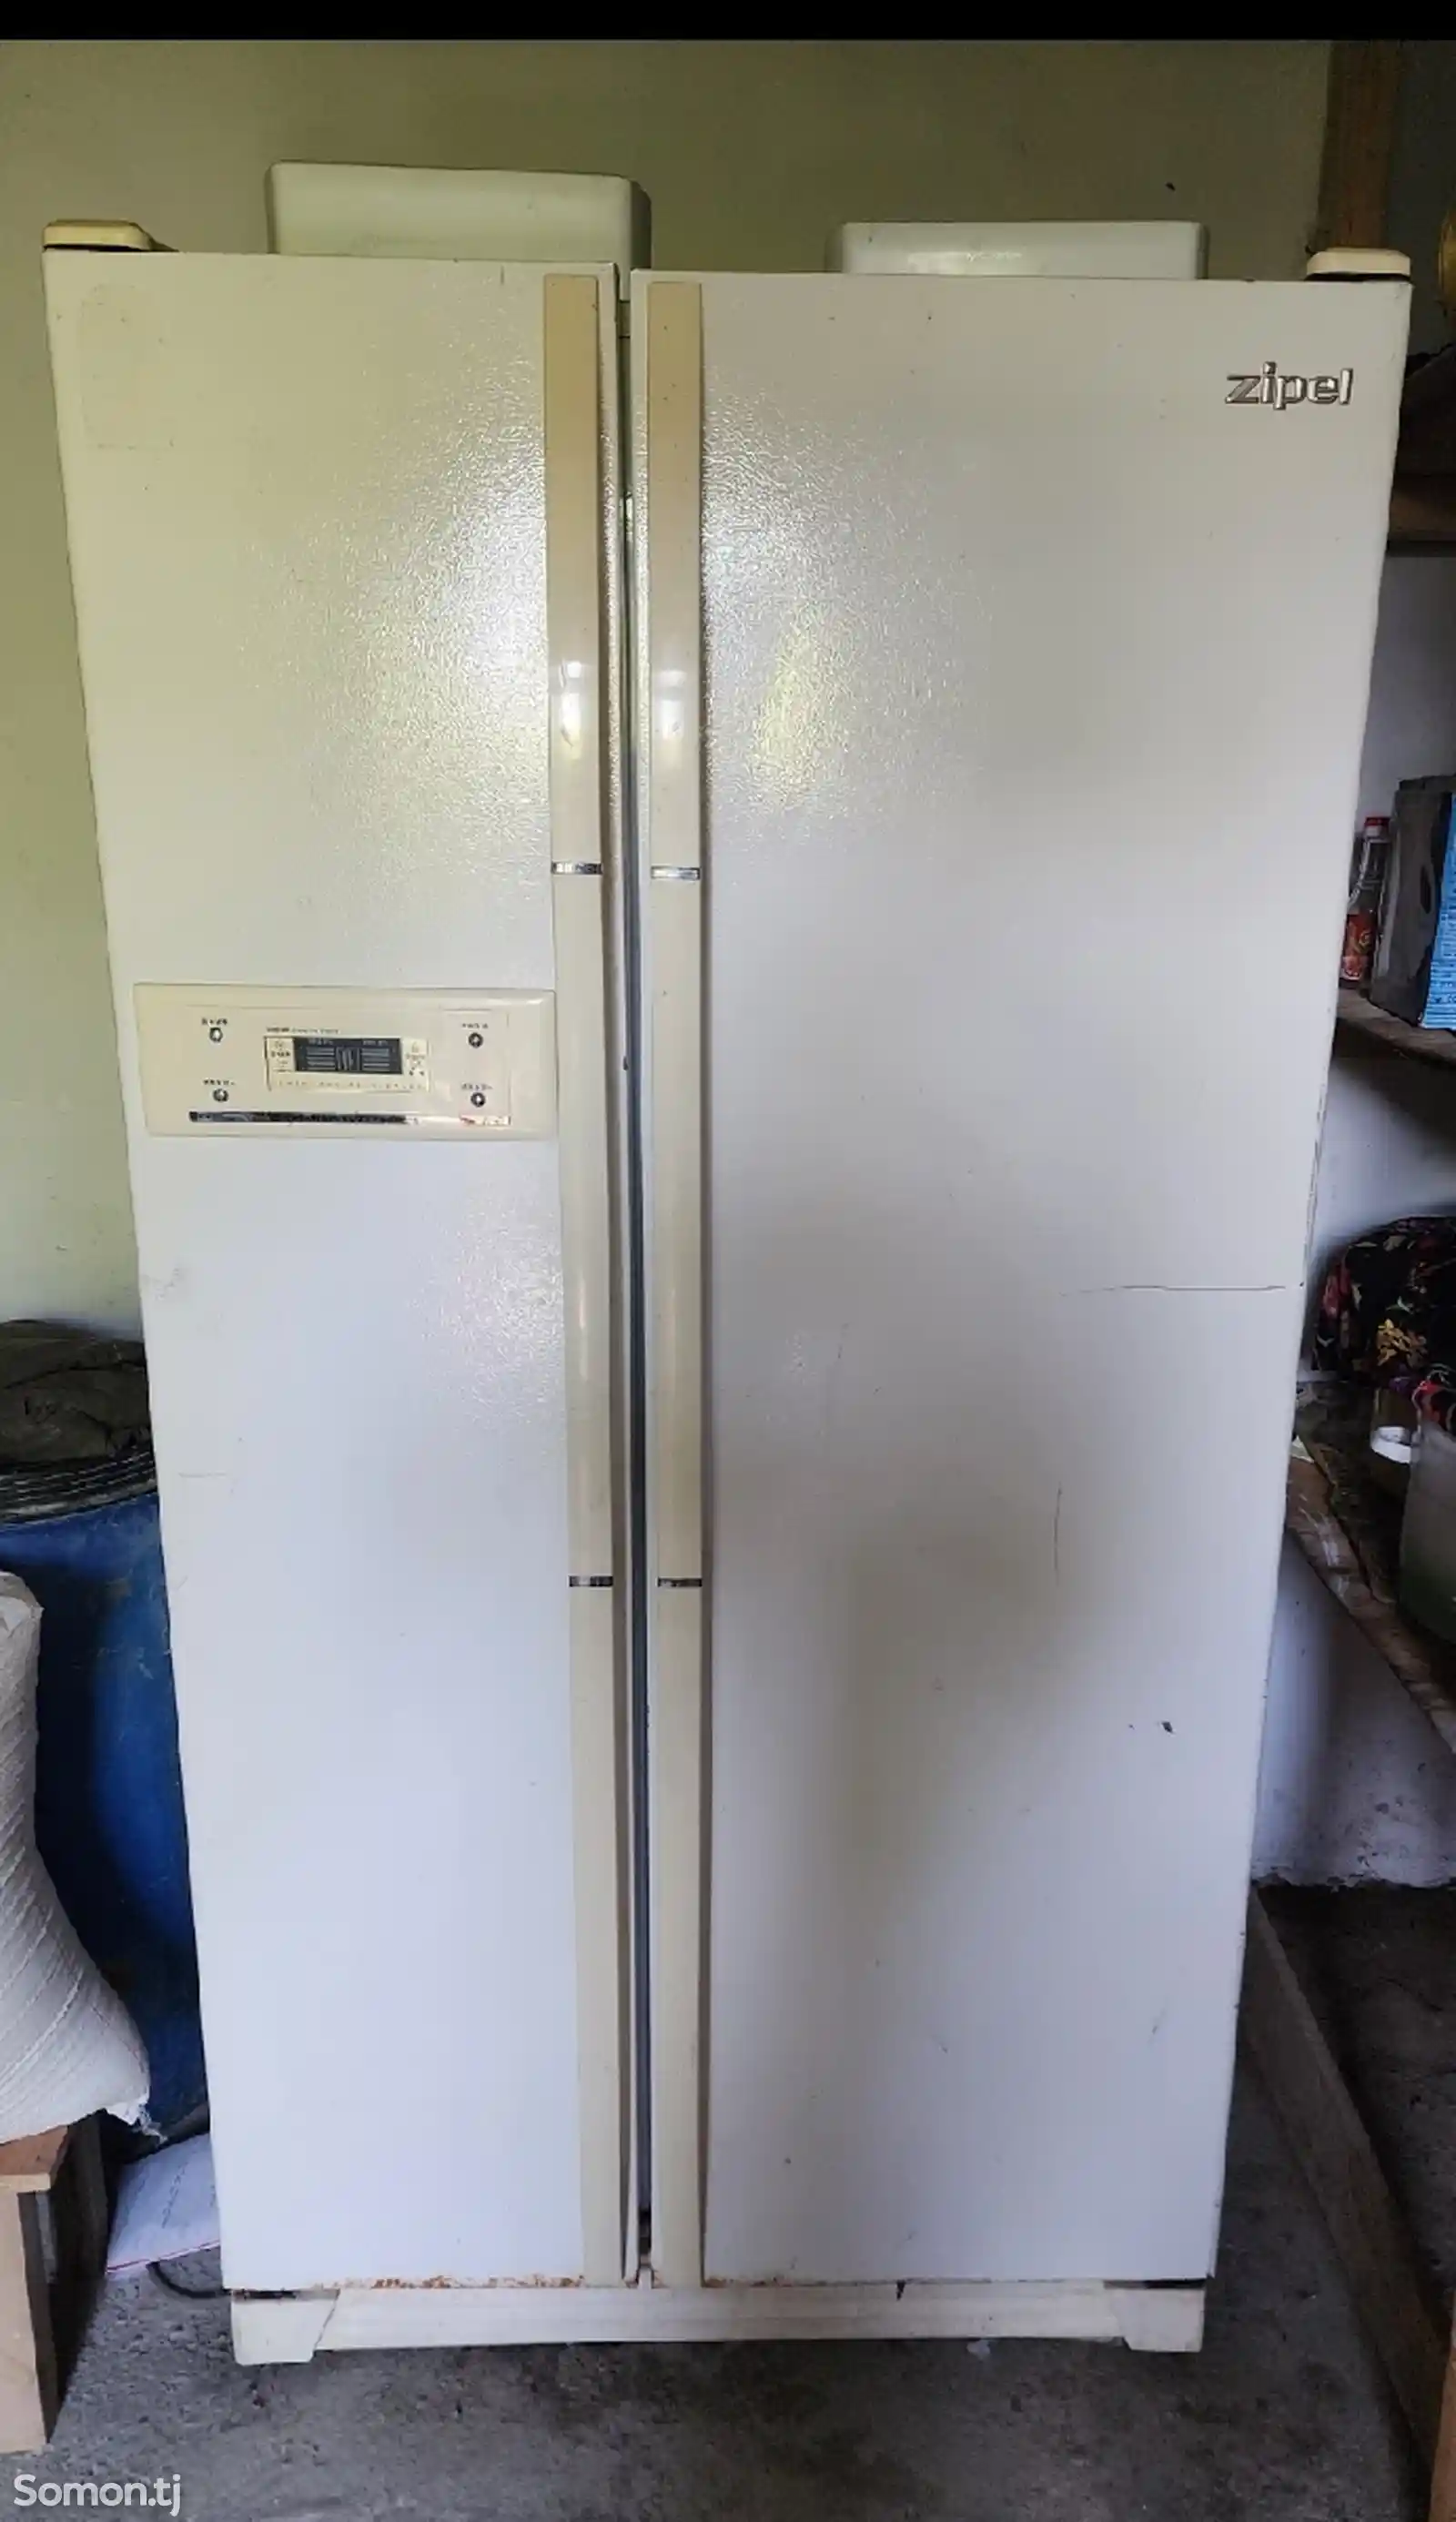 Холодильник Zipel-1